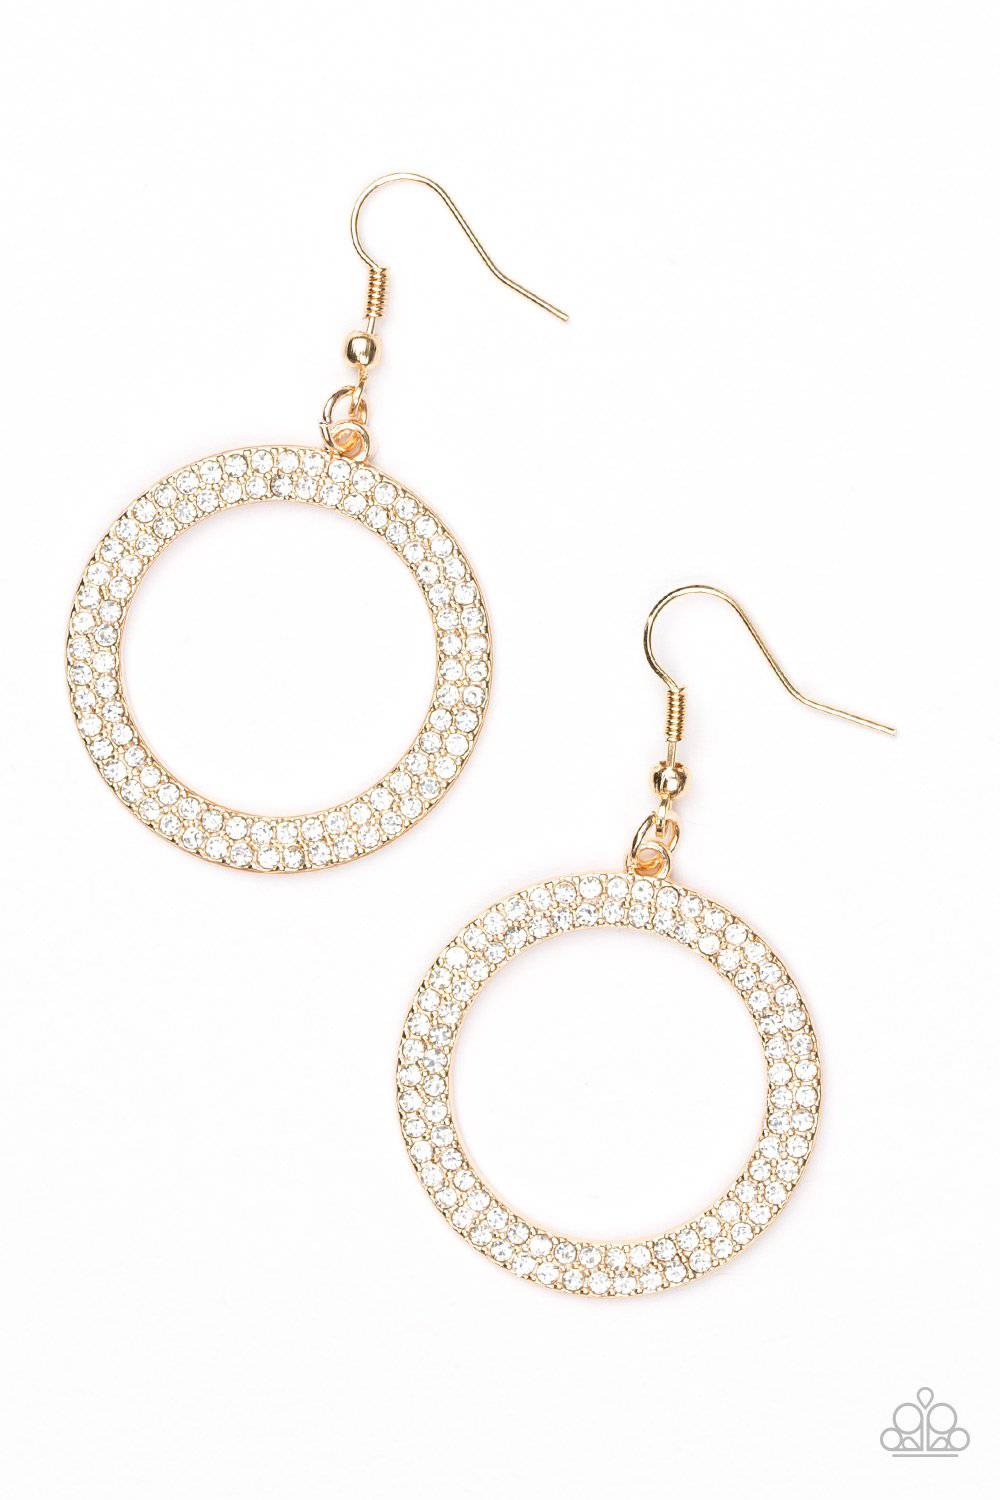 Bubbly Babe - Gold Rhinestone Earrings - Paparazzi Accessories - GlaMarous Titi Jewels